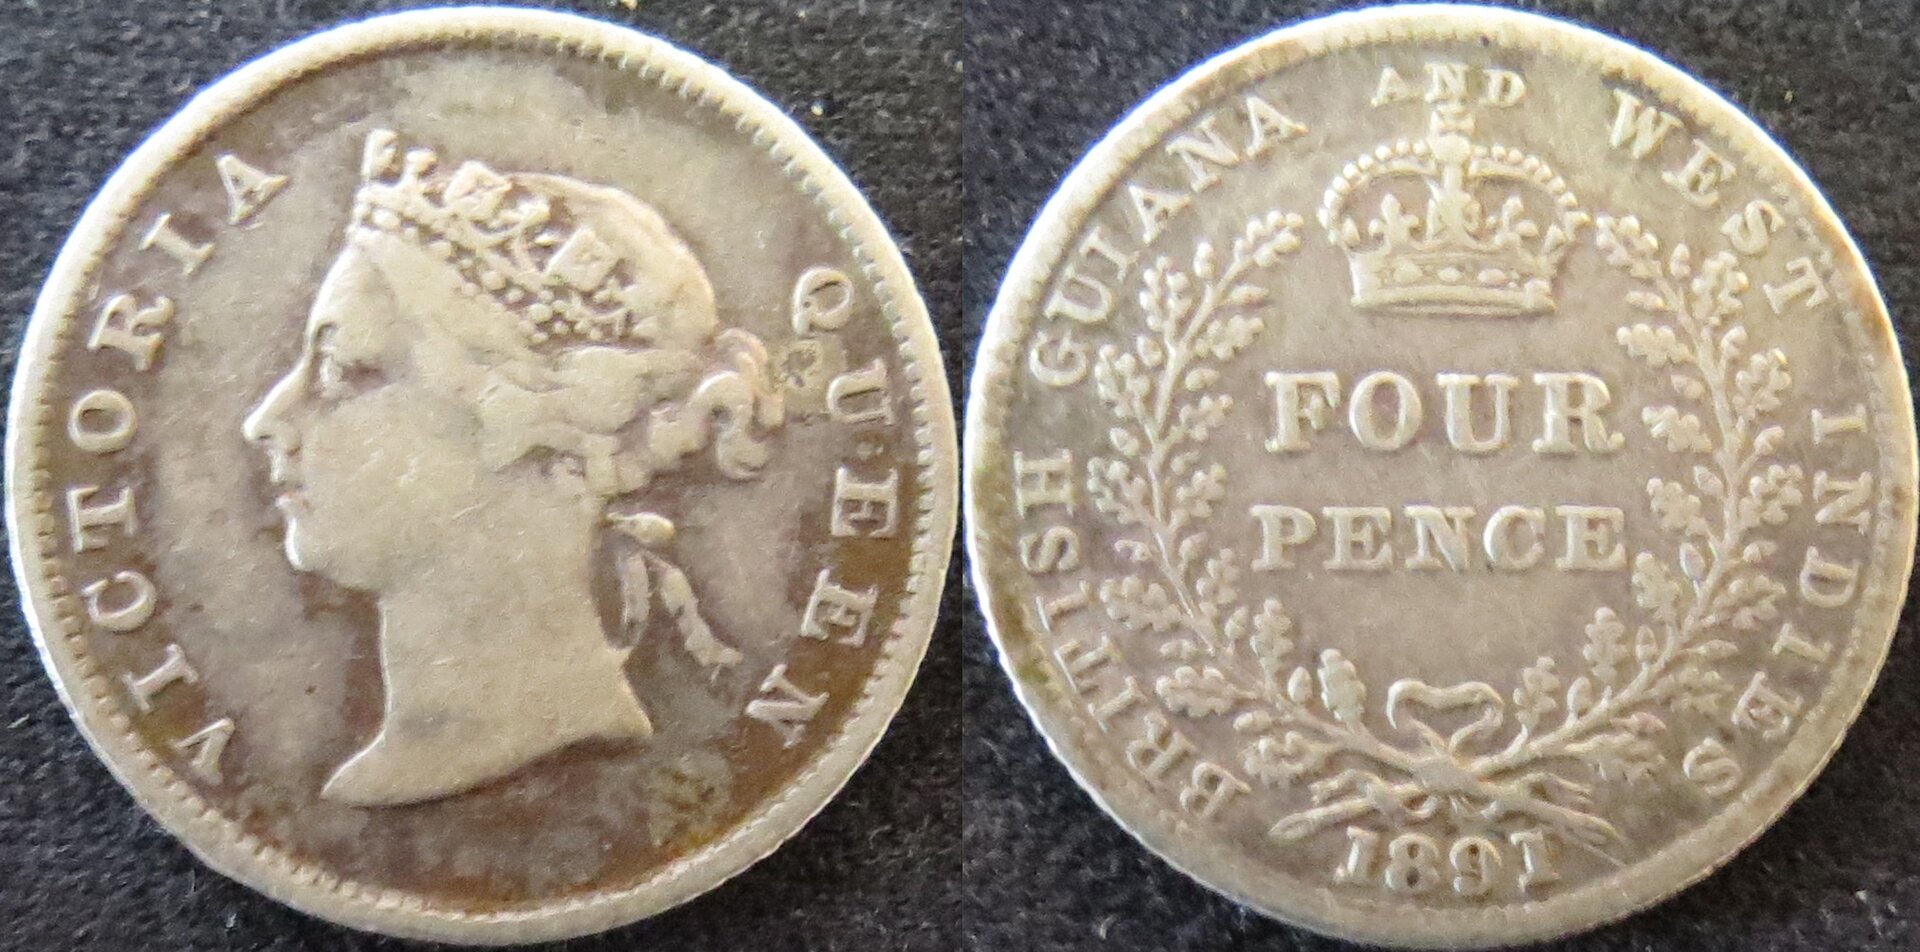 British Guiana 4 Pence 1891 Victoria copy.jpeg